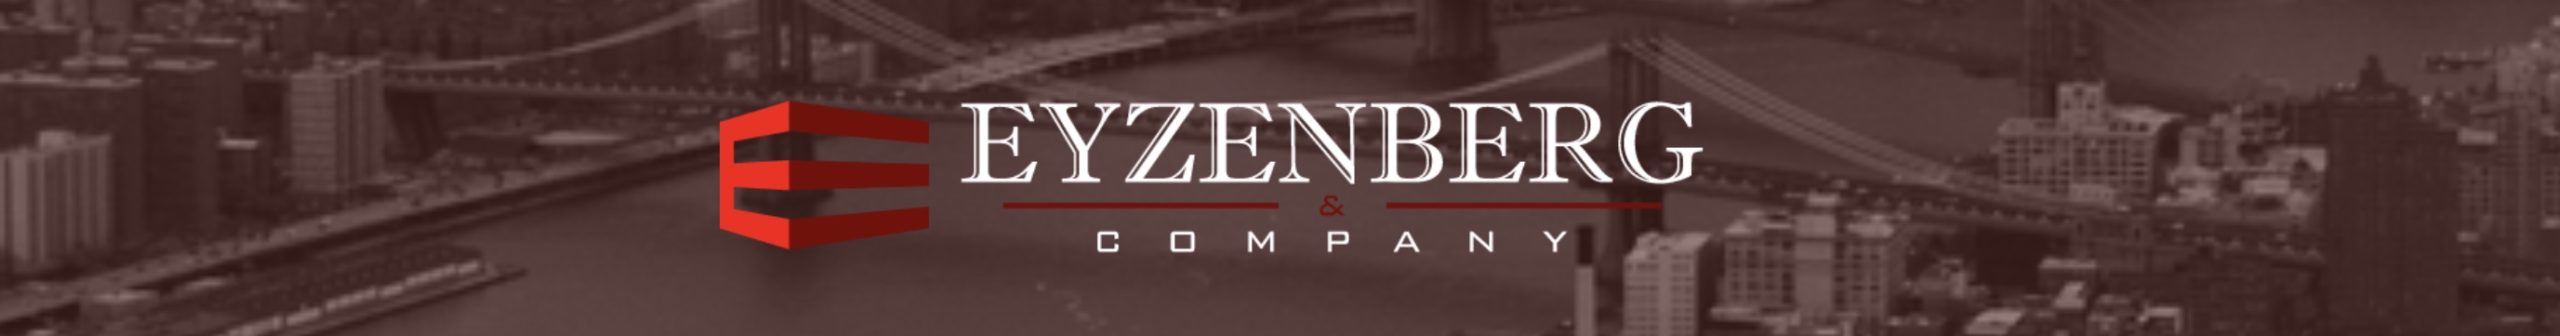 Eyzenberg & Company